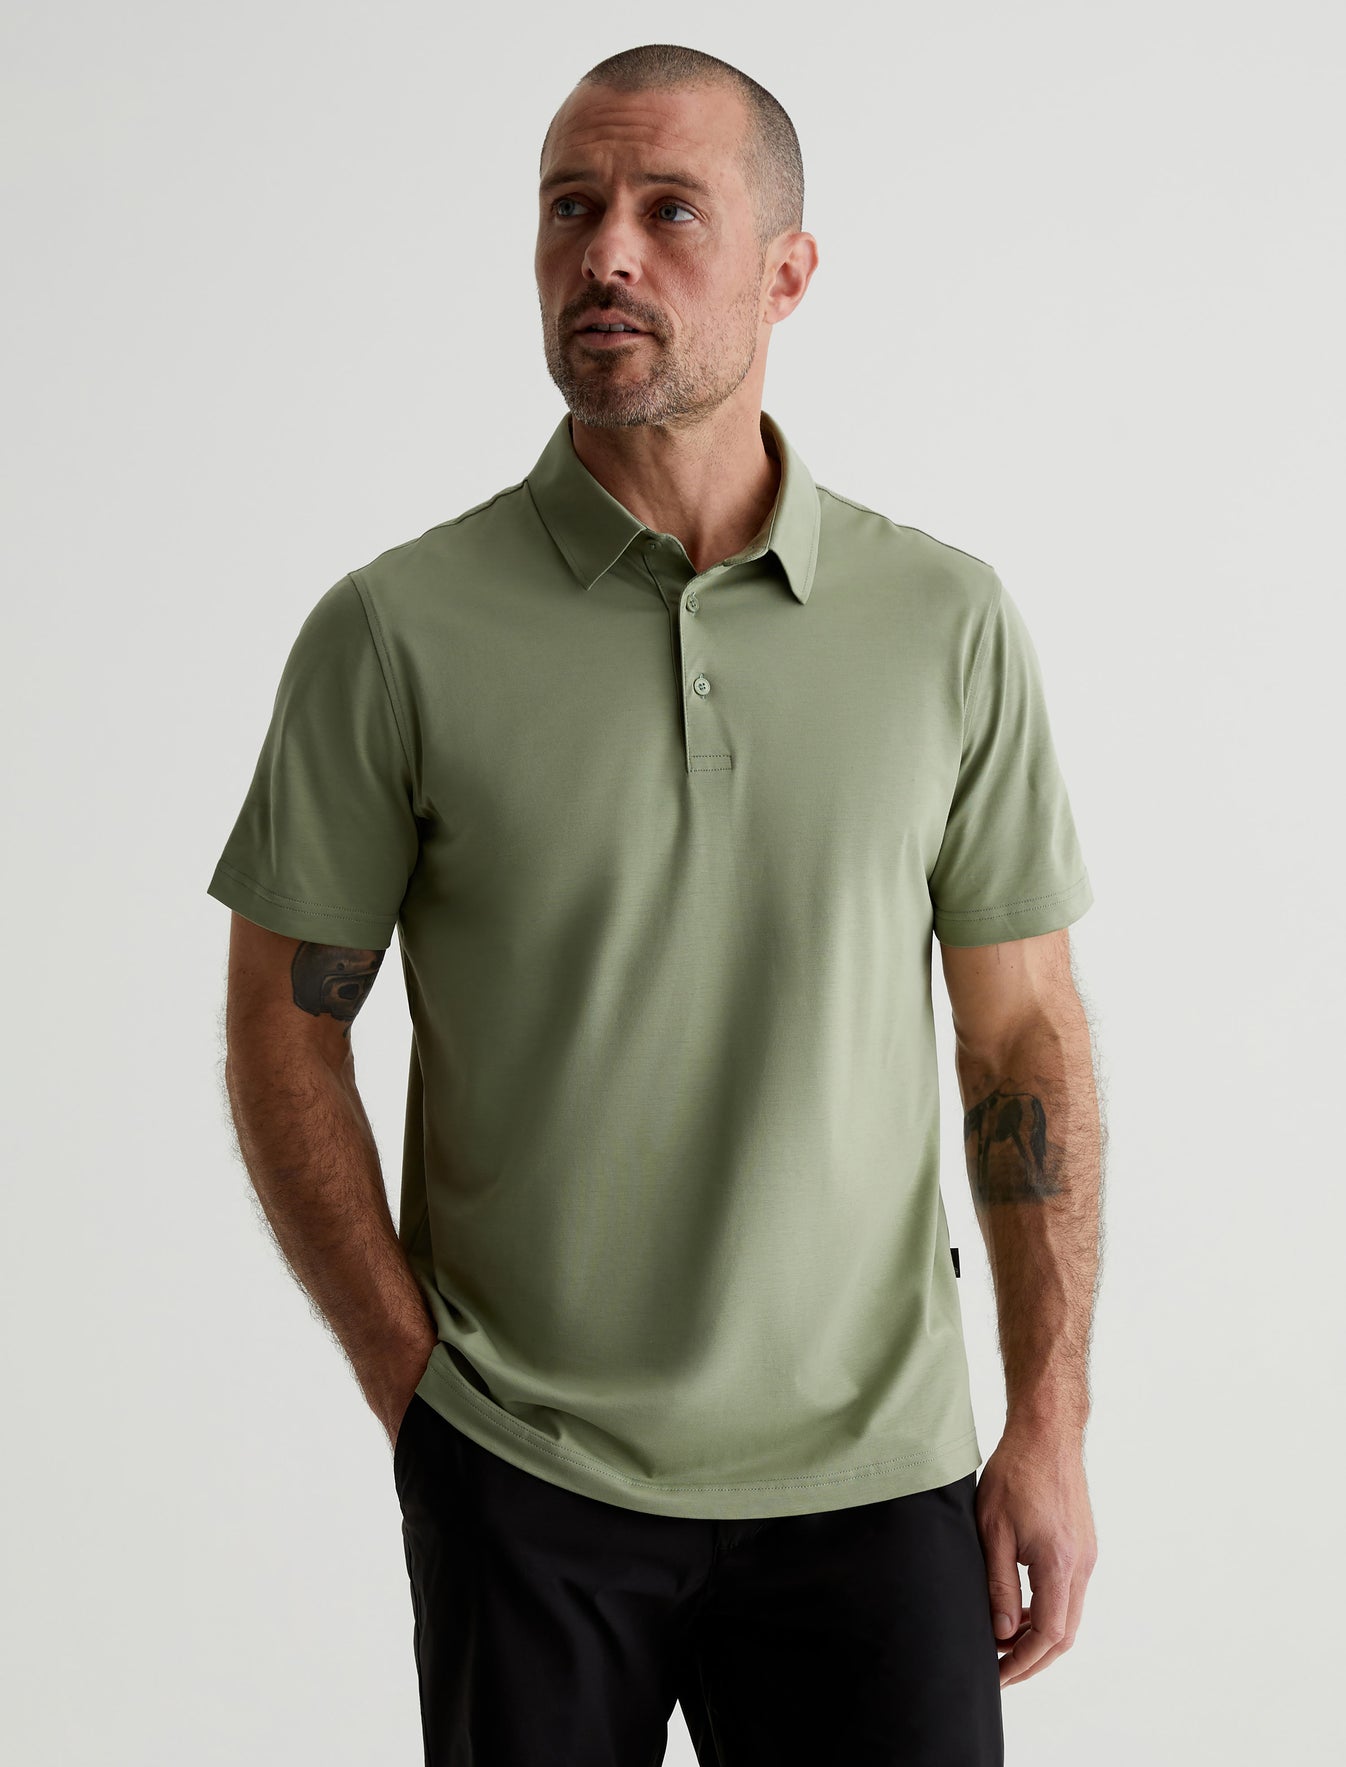 Ace S/S Polo Bonsai Tree Classic Fit Short Sleeve Polo T-Shirt Men Top Photo 2